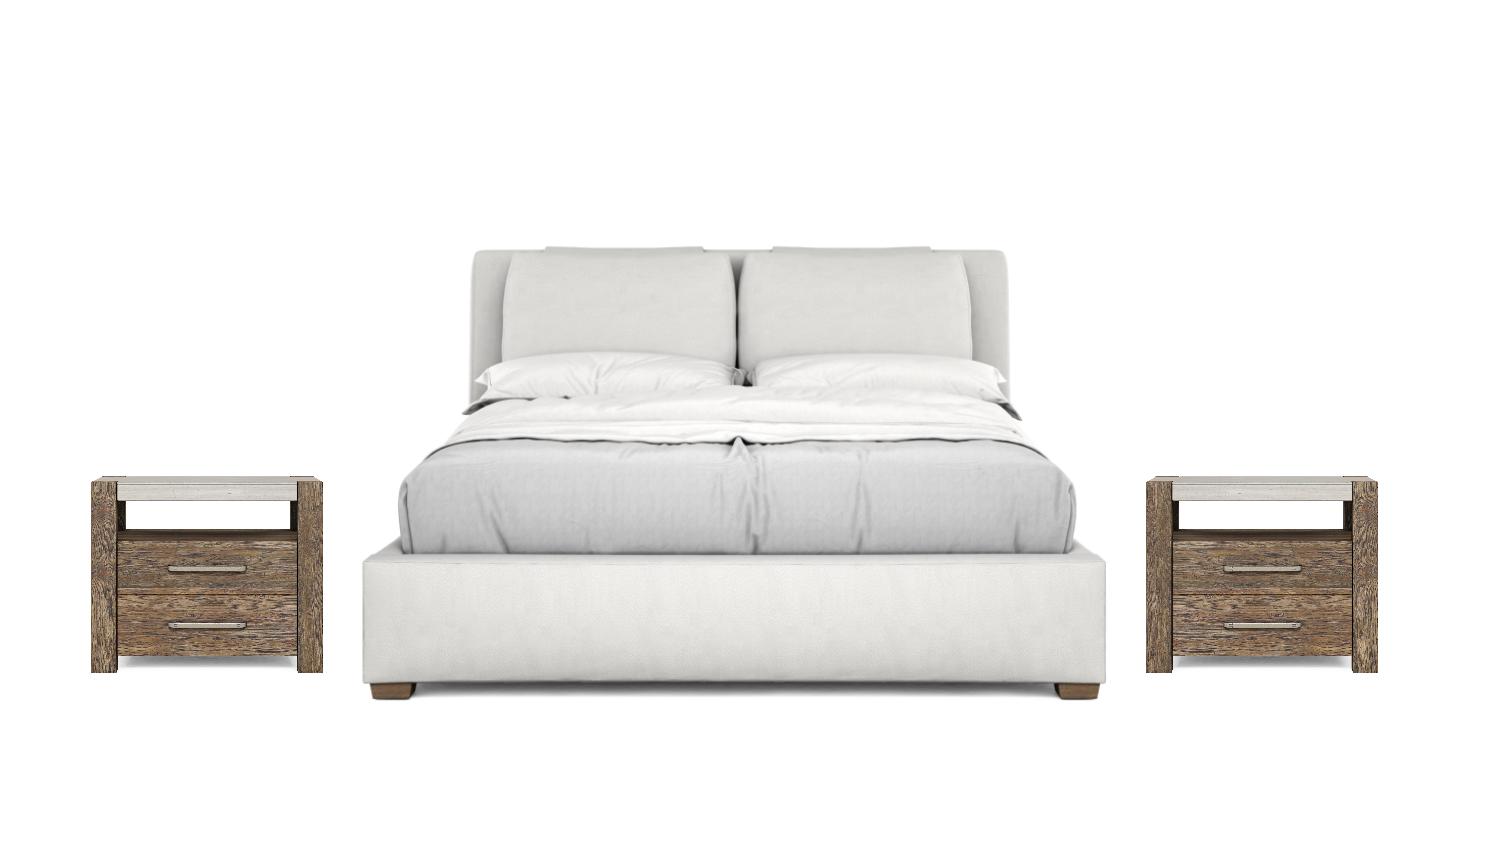 Modern, Transitional Platform Bedroom Set Stockyard 284126-2303-WH-2N-3PCS in Light Gray, White Fabric